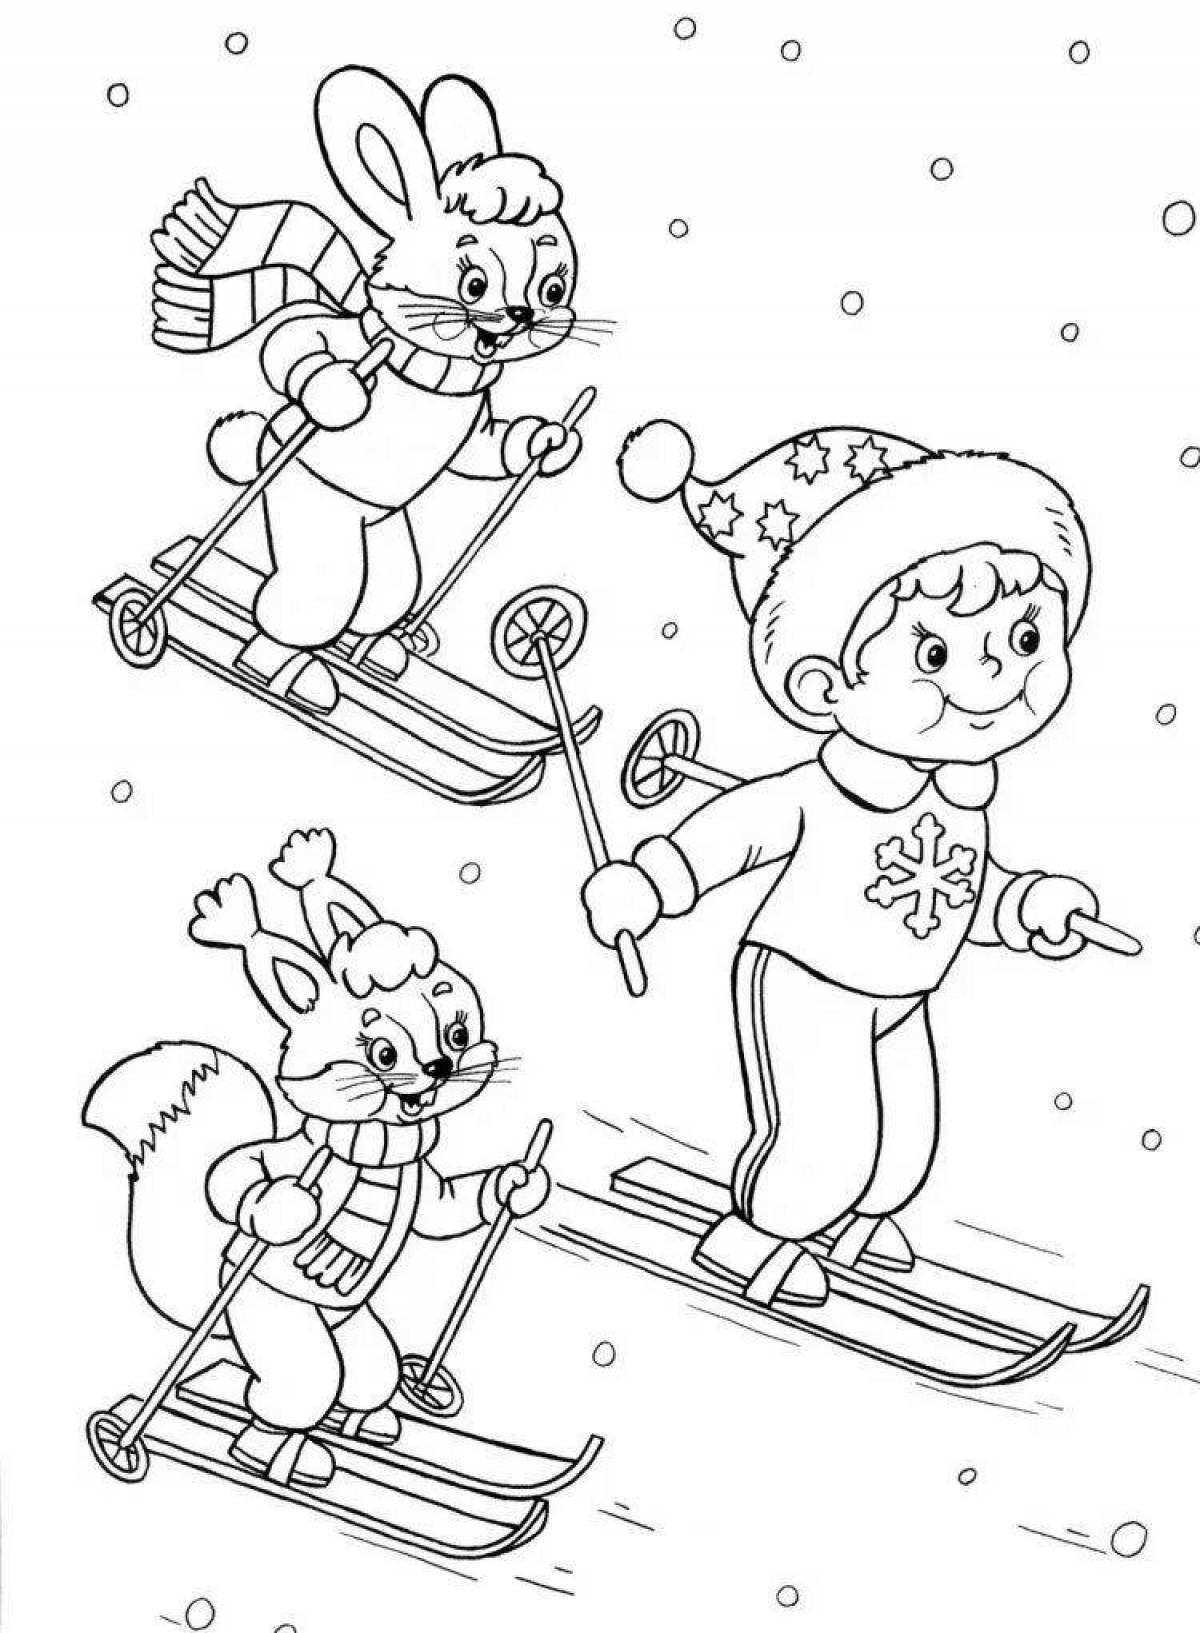 Senior group of animated winter sports